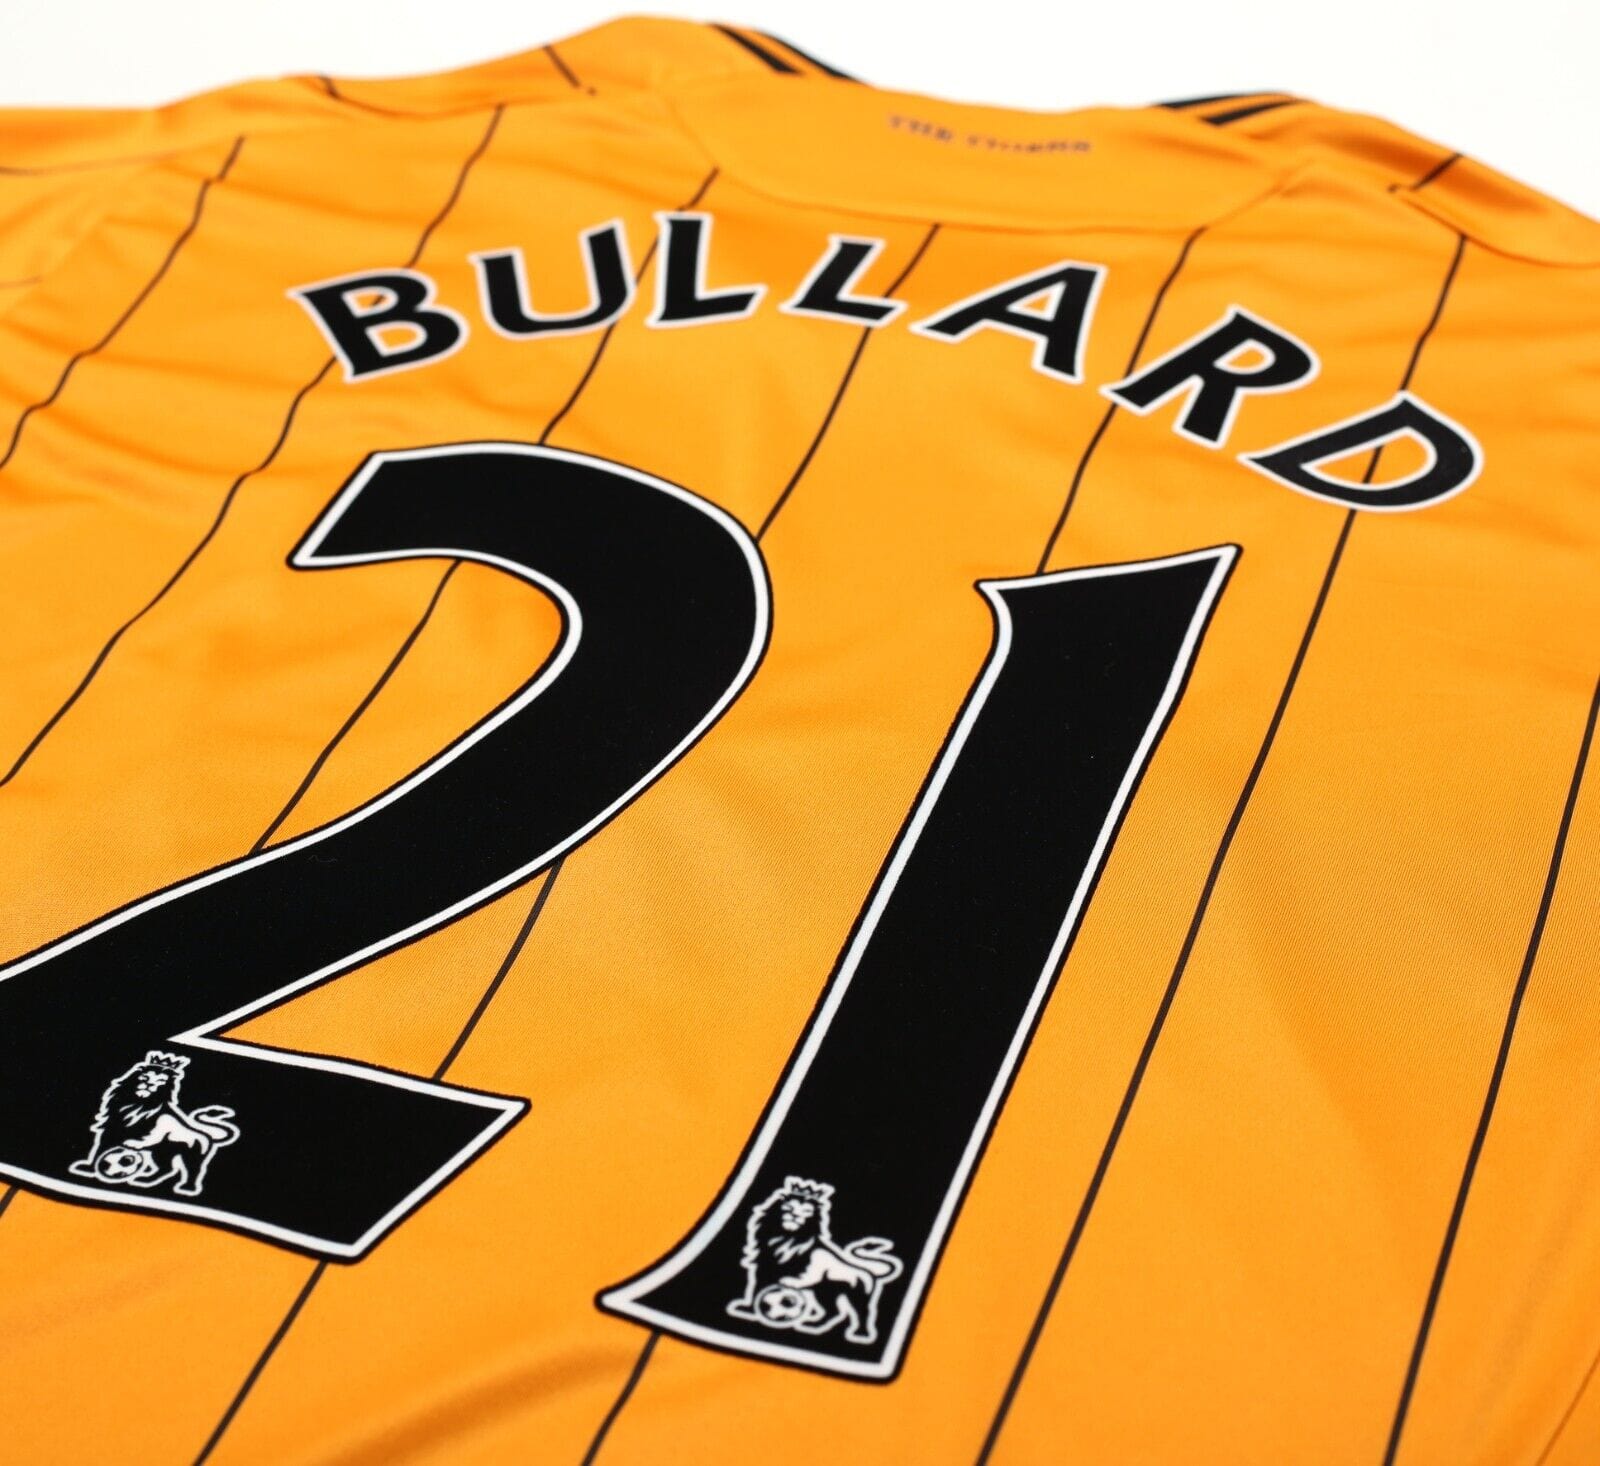 2009/10 BULLARD #21 Hull City Vintage Umbro Home Football Shirt (M)